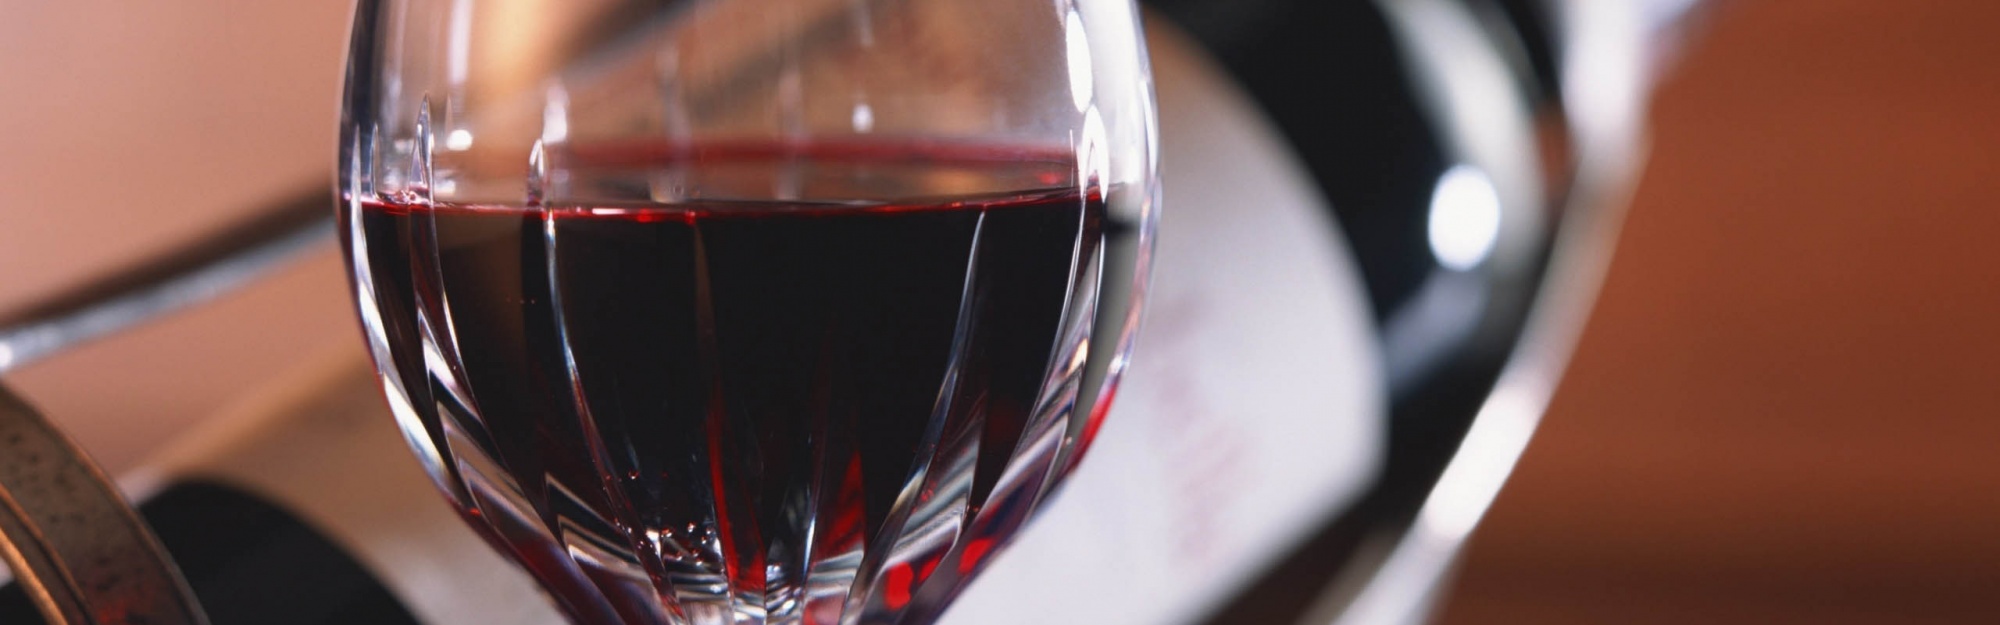 Red Wine Glass